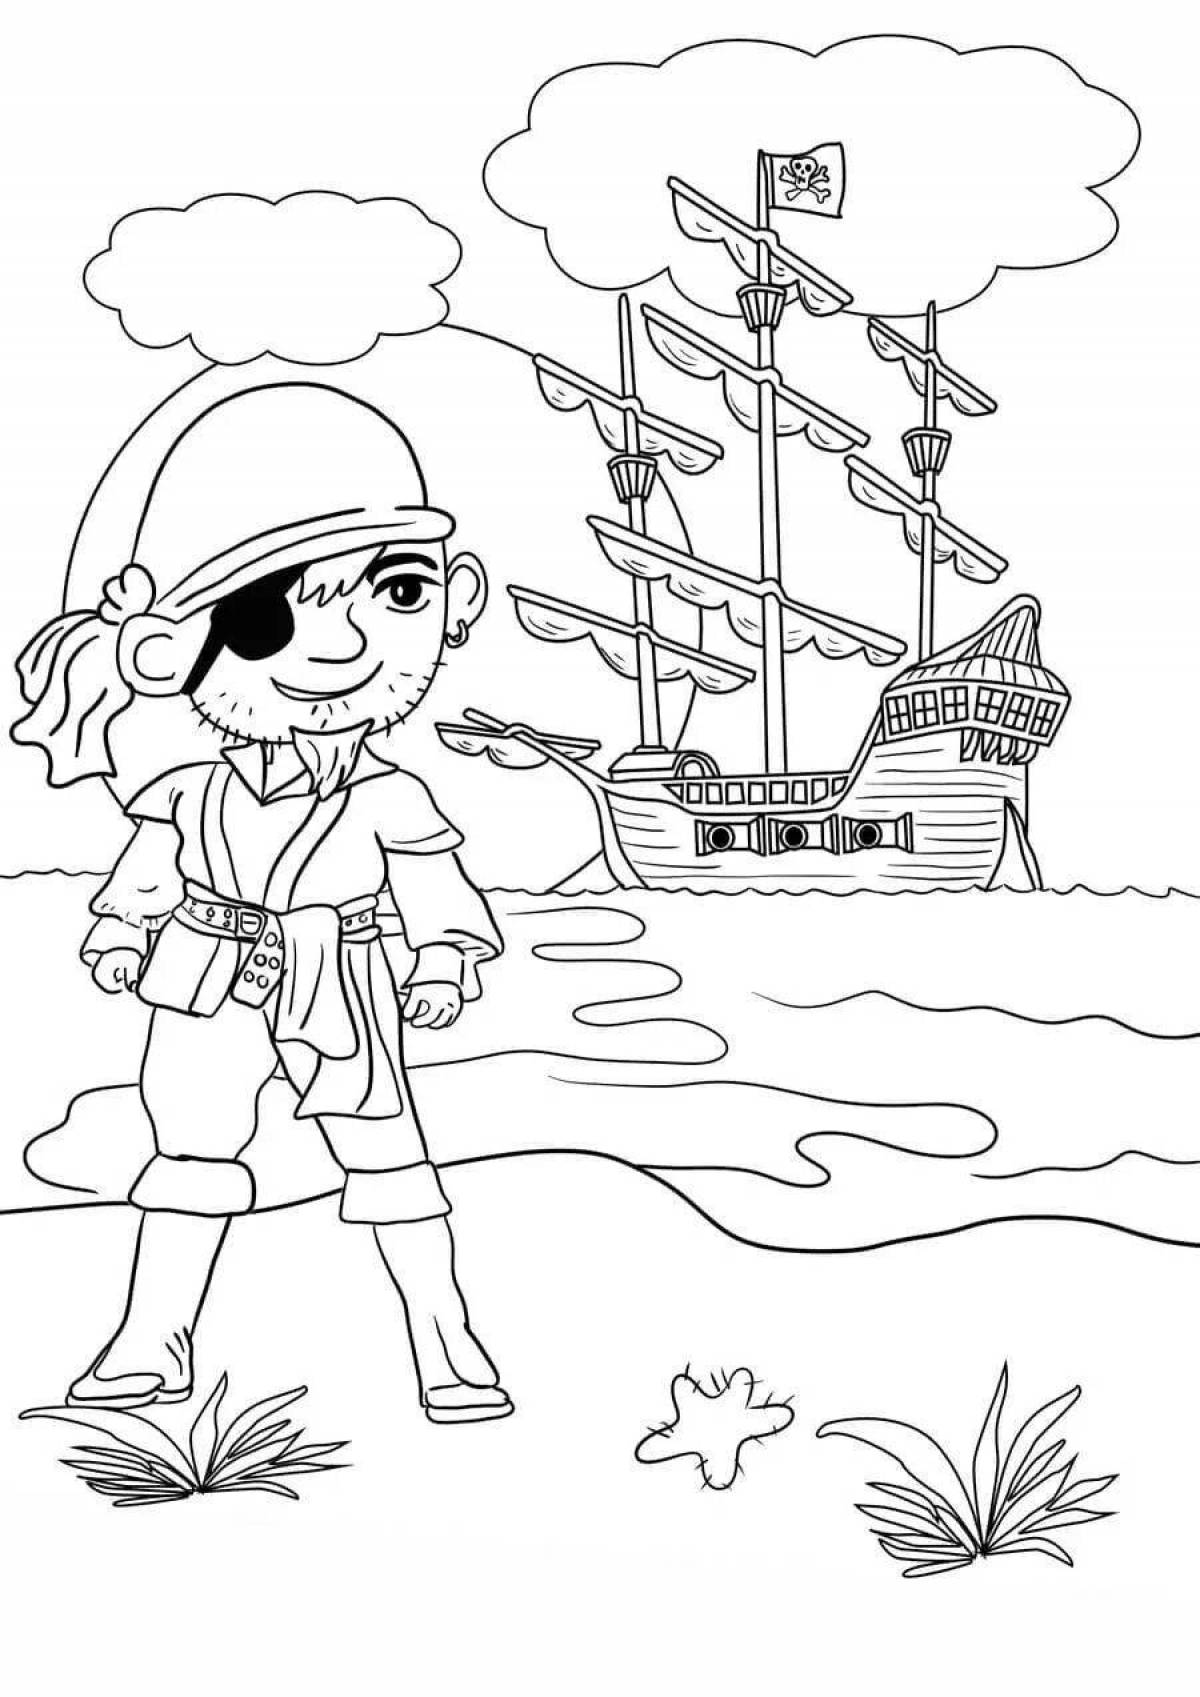 Adorable pirate coloring book